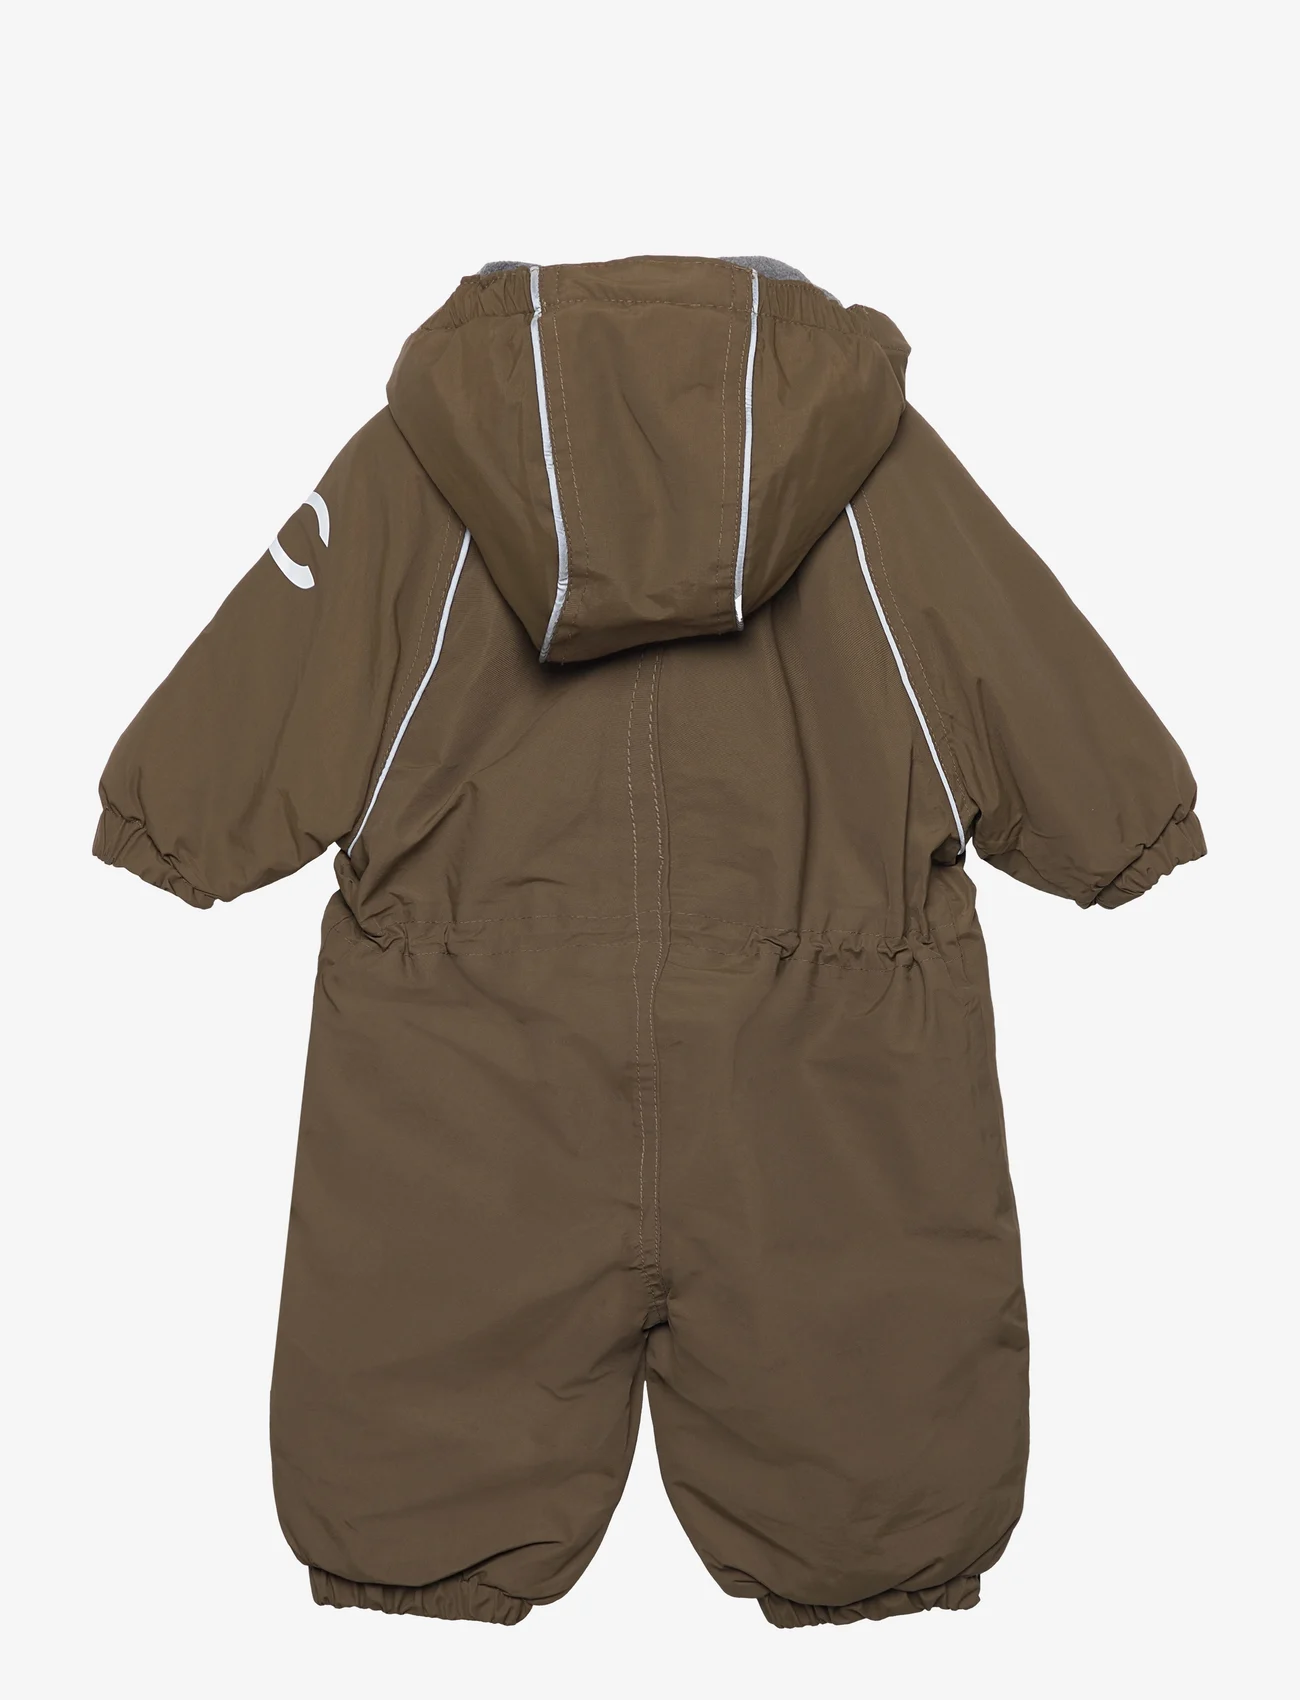 mikk-line - Nylon Baby Suit - Solid - schneeanzug - beech - 1